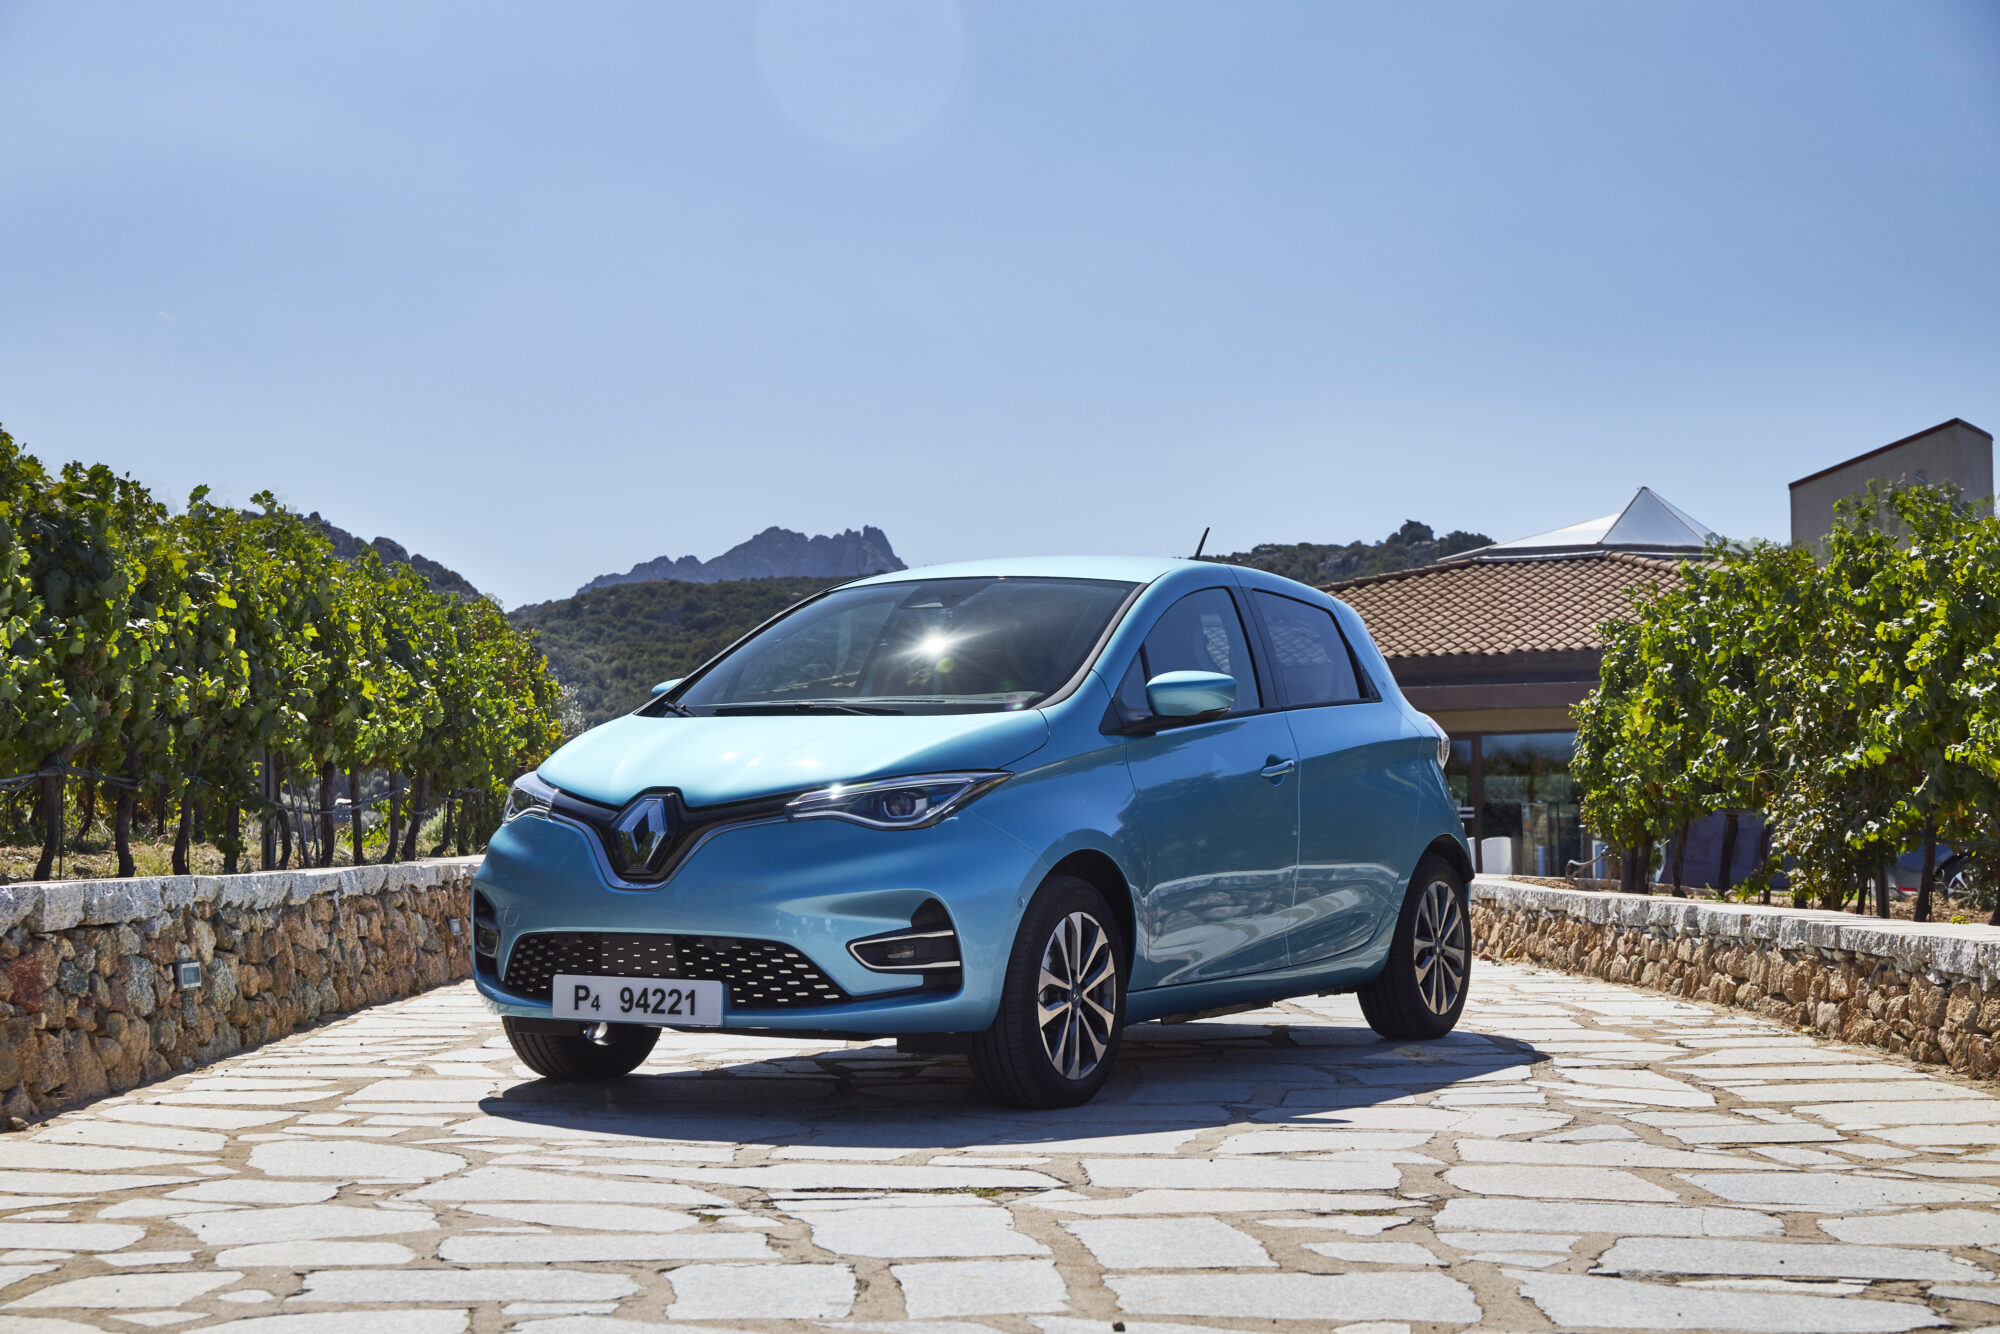 2019 - New Renault ZOE tests drive in Sardinia